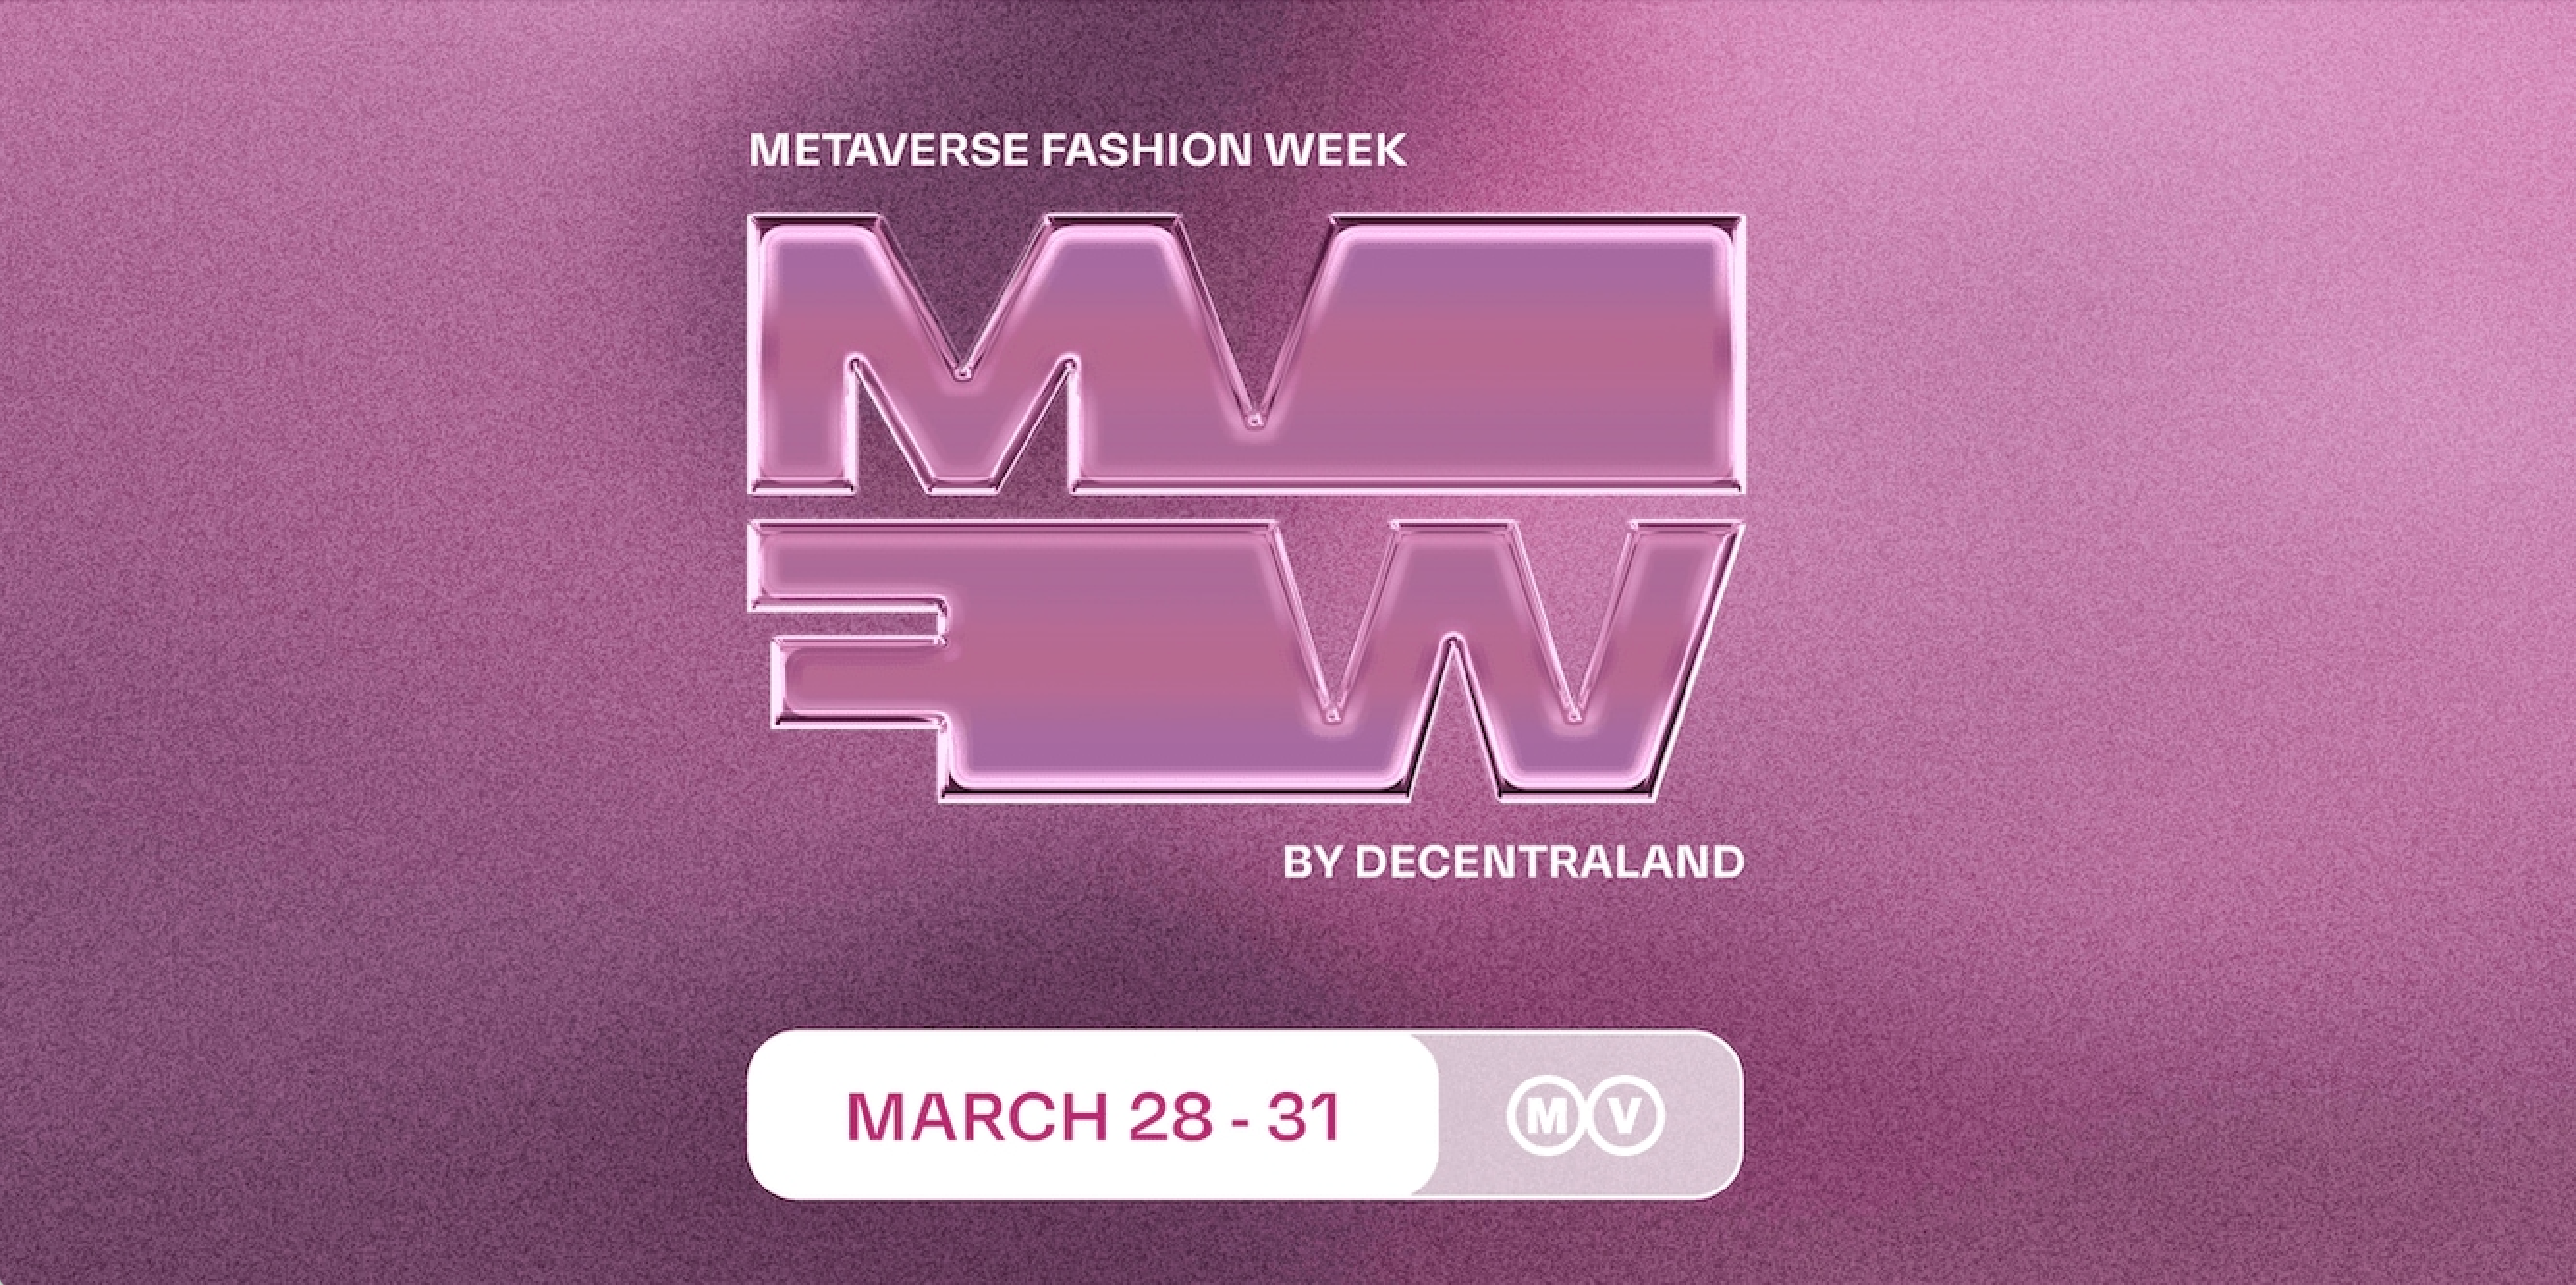 Tommy Hilfiger to Participate in Decentraland Metaverse Fashion Week – WWD